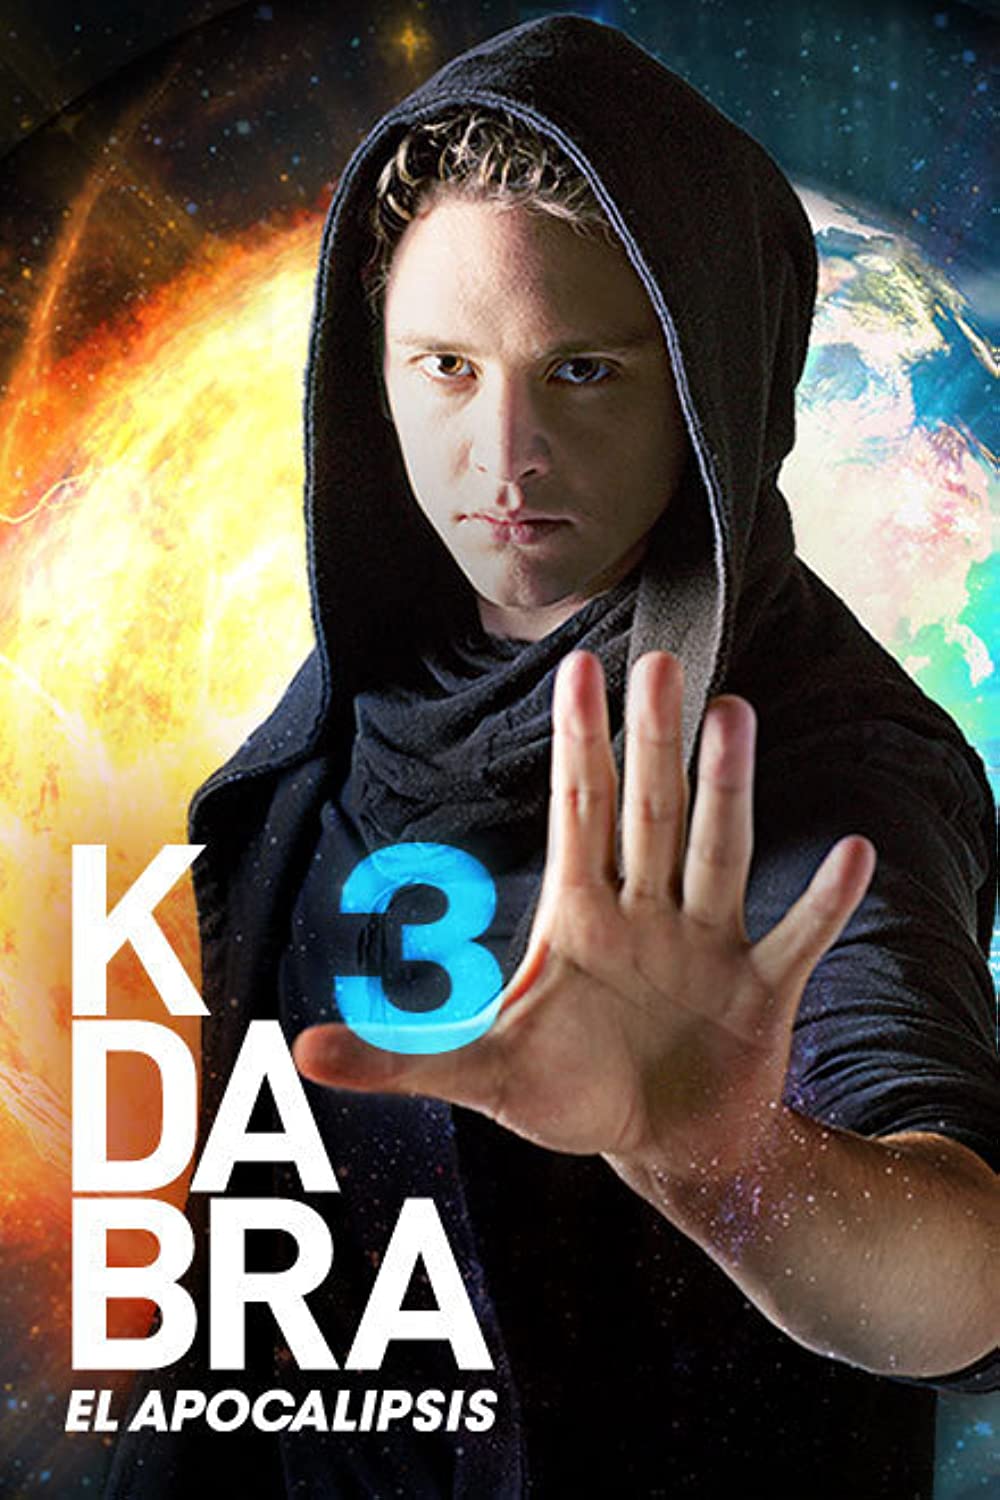 Kdabra